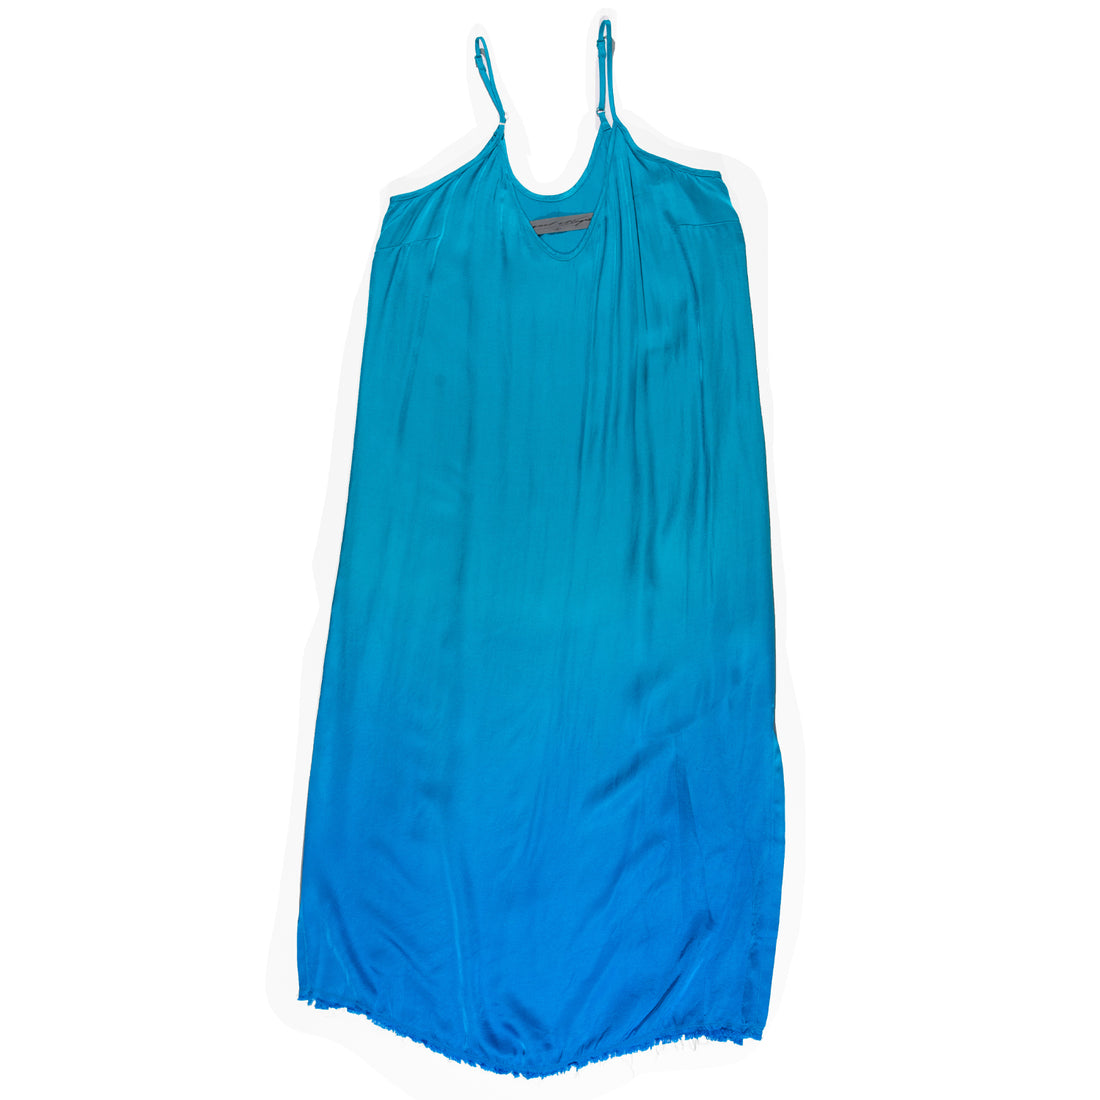 Raquel Allegra Slip Dress in Aqua Dip Dye